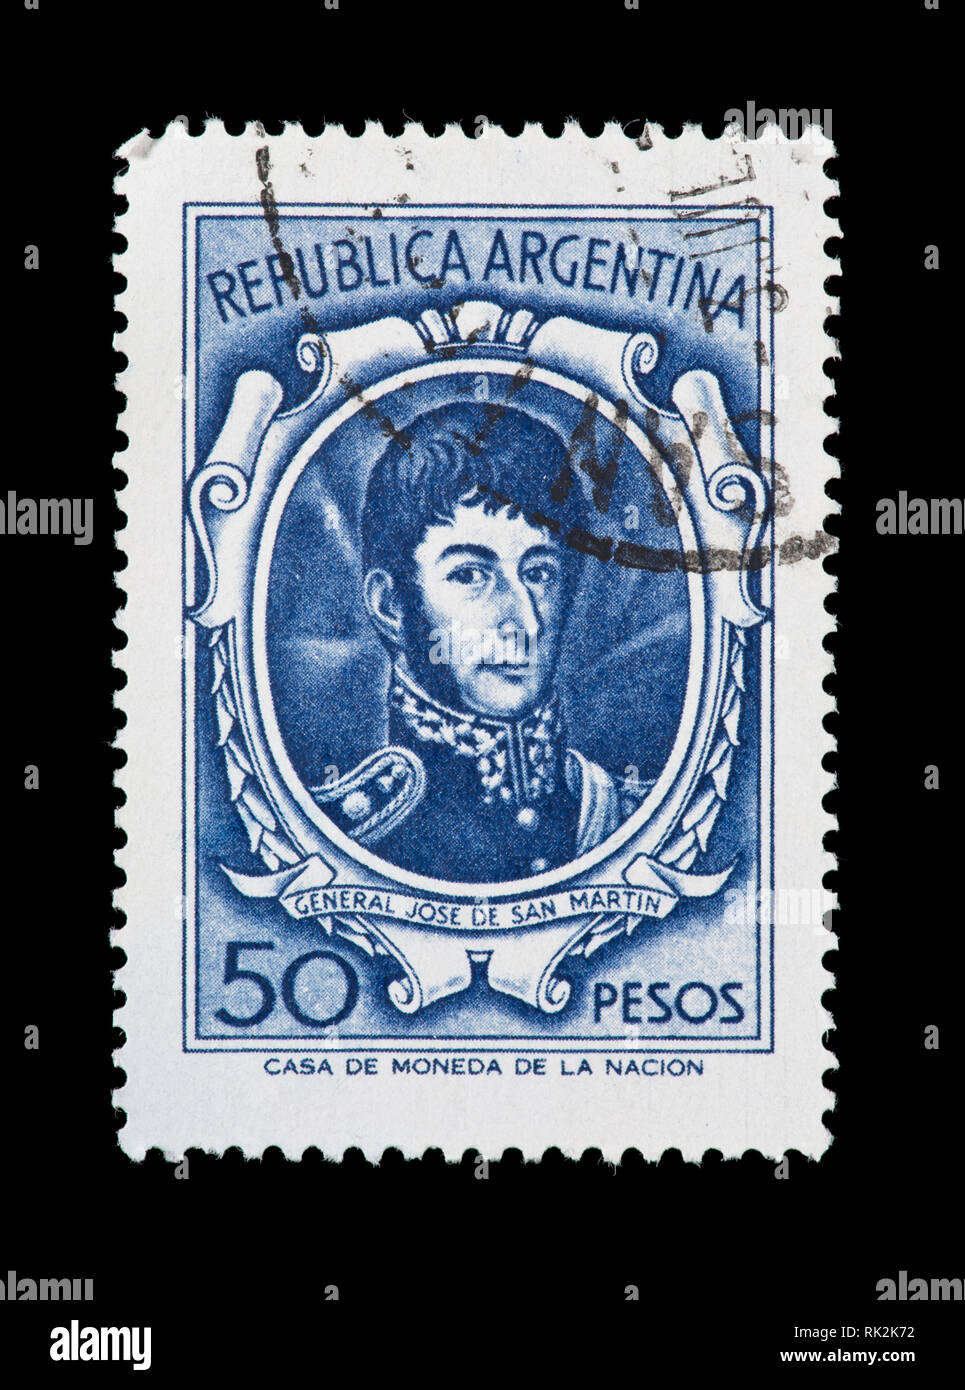 Postage stamp from Argentina depicting Jose de San Martin Stock Photo